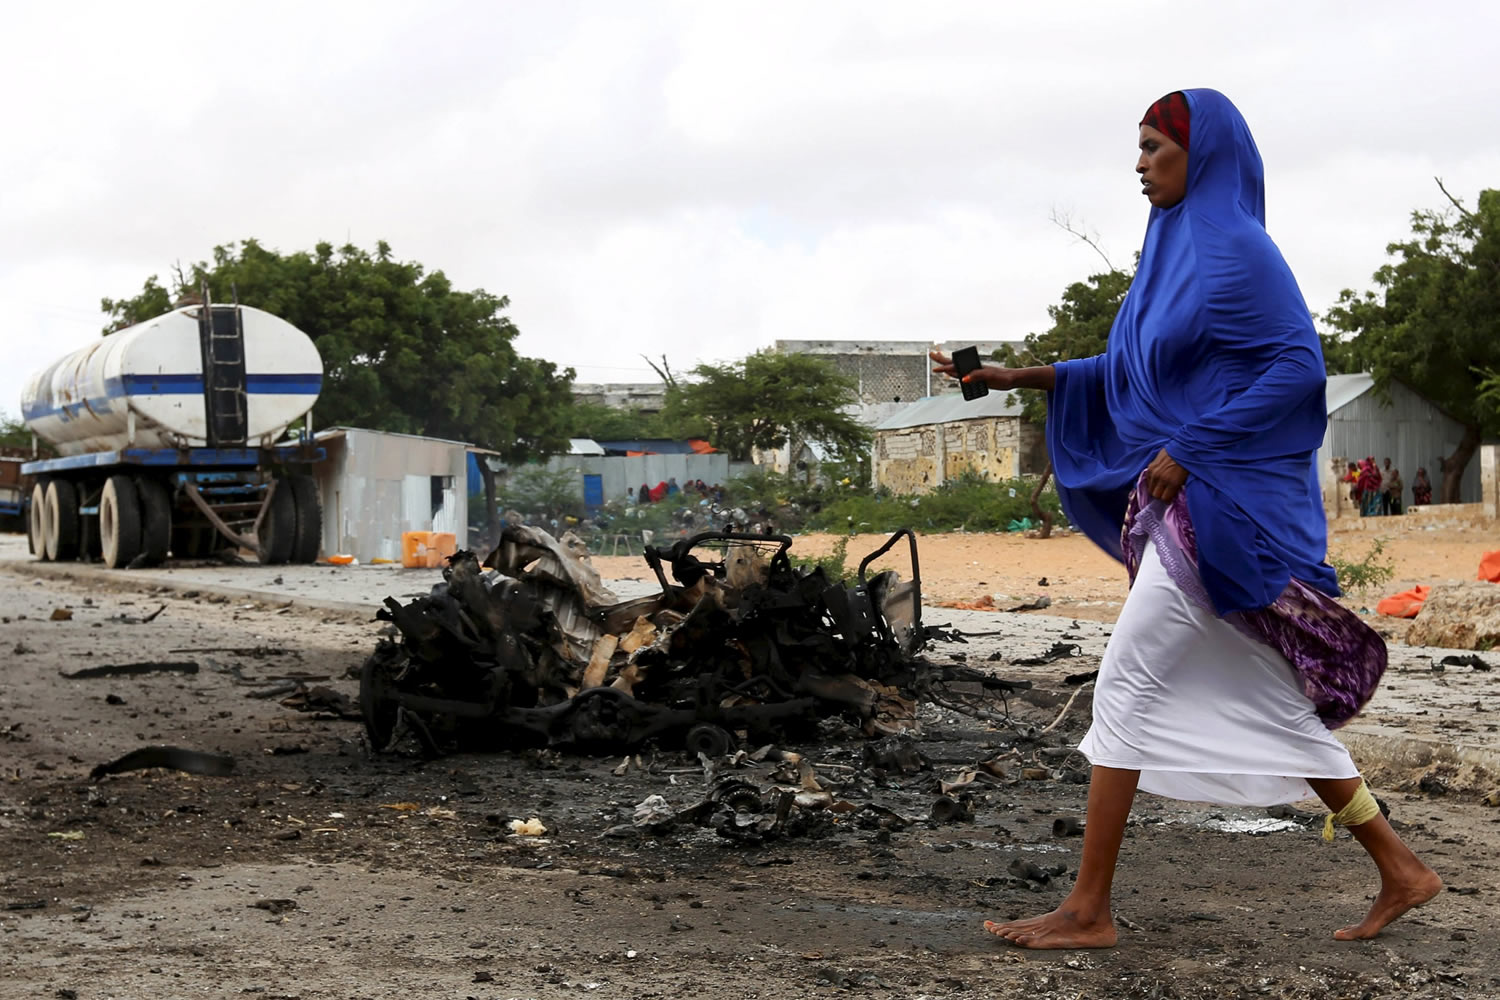 Coche bomba del Al Sahbaab en Mogadiscio contra entrenadores militares de Emiratos Árabes Unidos